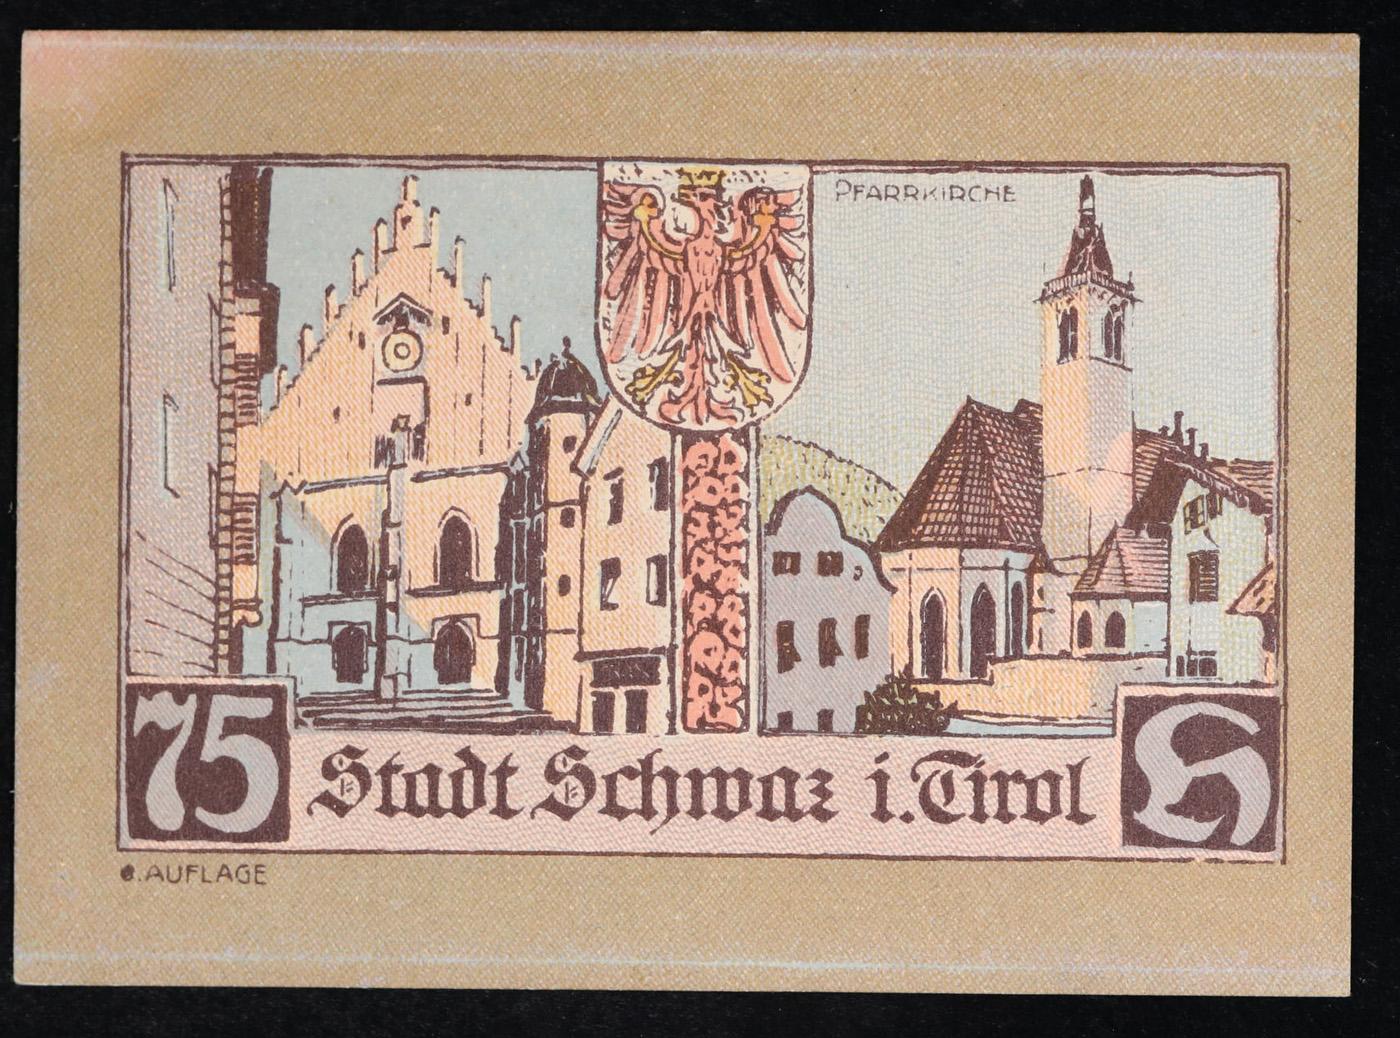 1920 Austria(tirol) 75 Heller Note P# Grades Gem CU